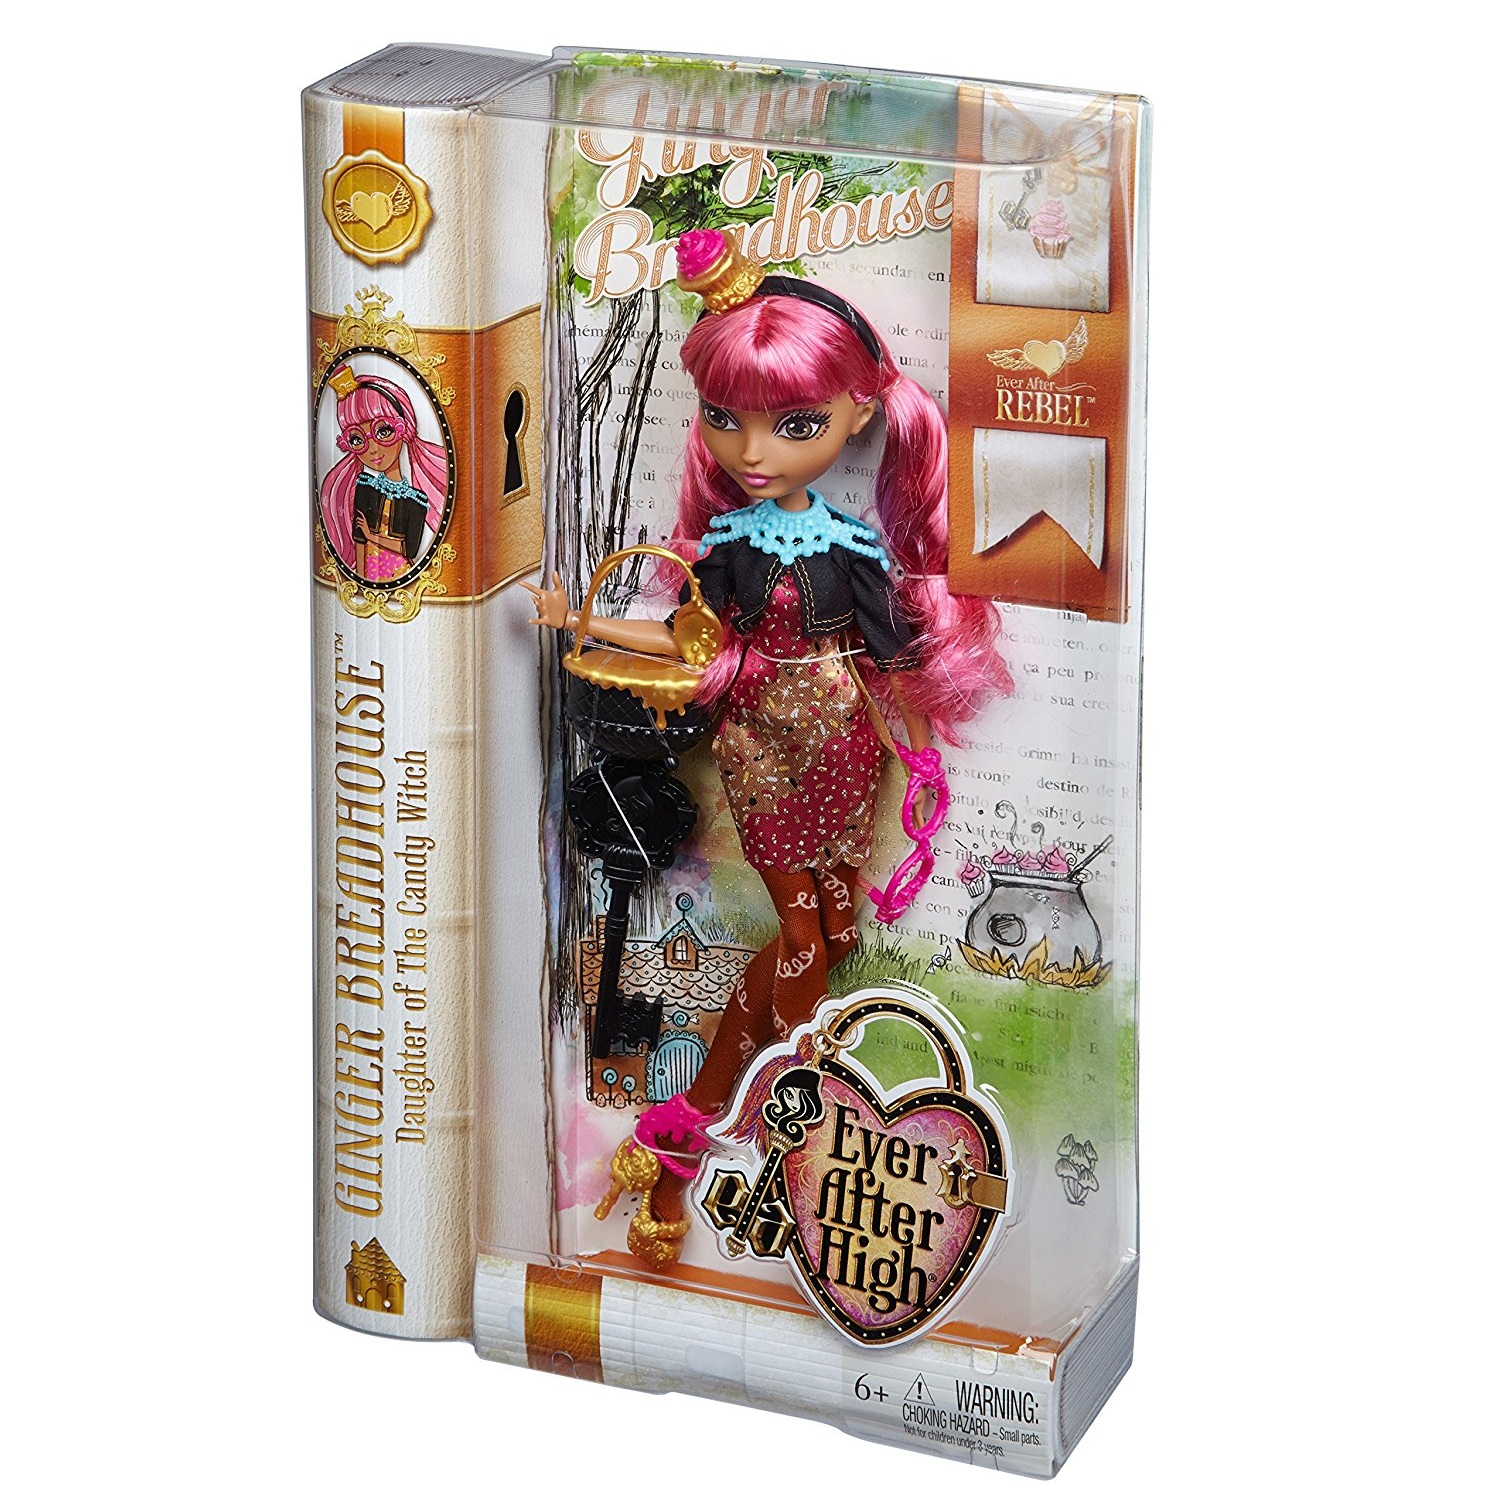 Ginger Breadhouse - búp bê con gái của phù thủy kẹo Ever After High Ginger Breadhouse Doll